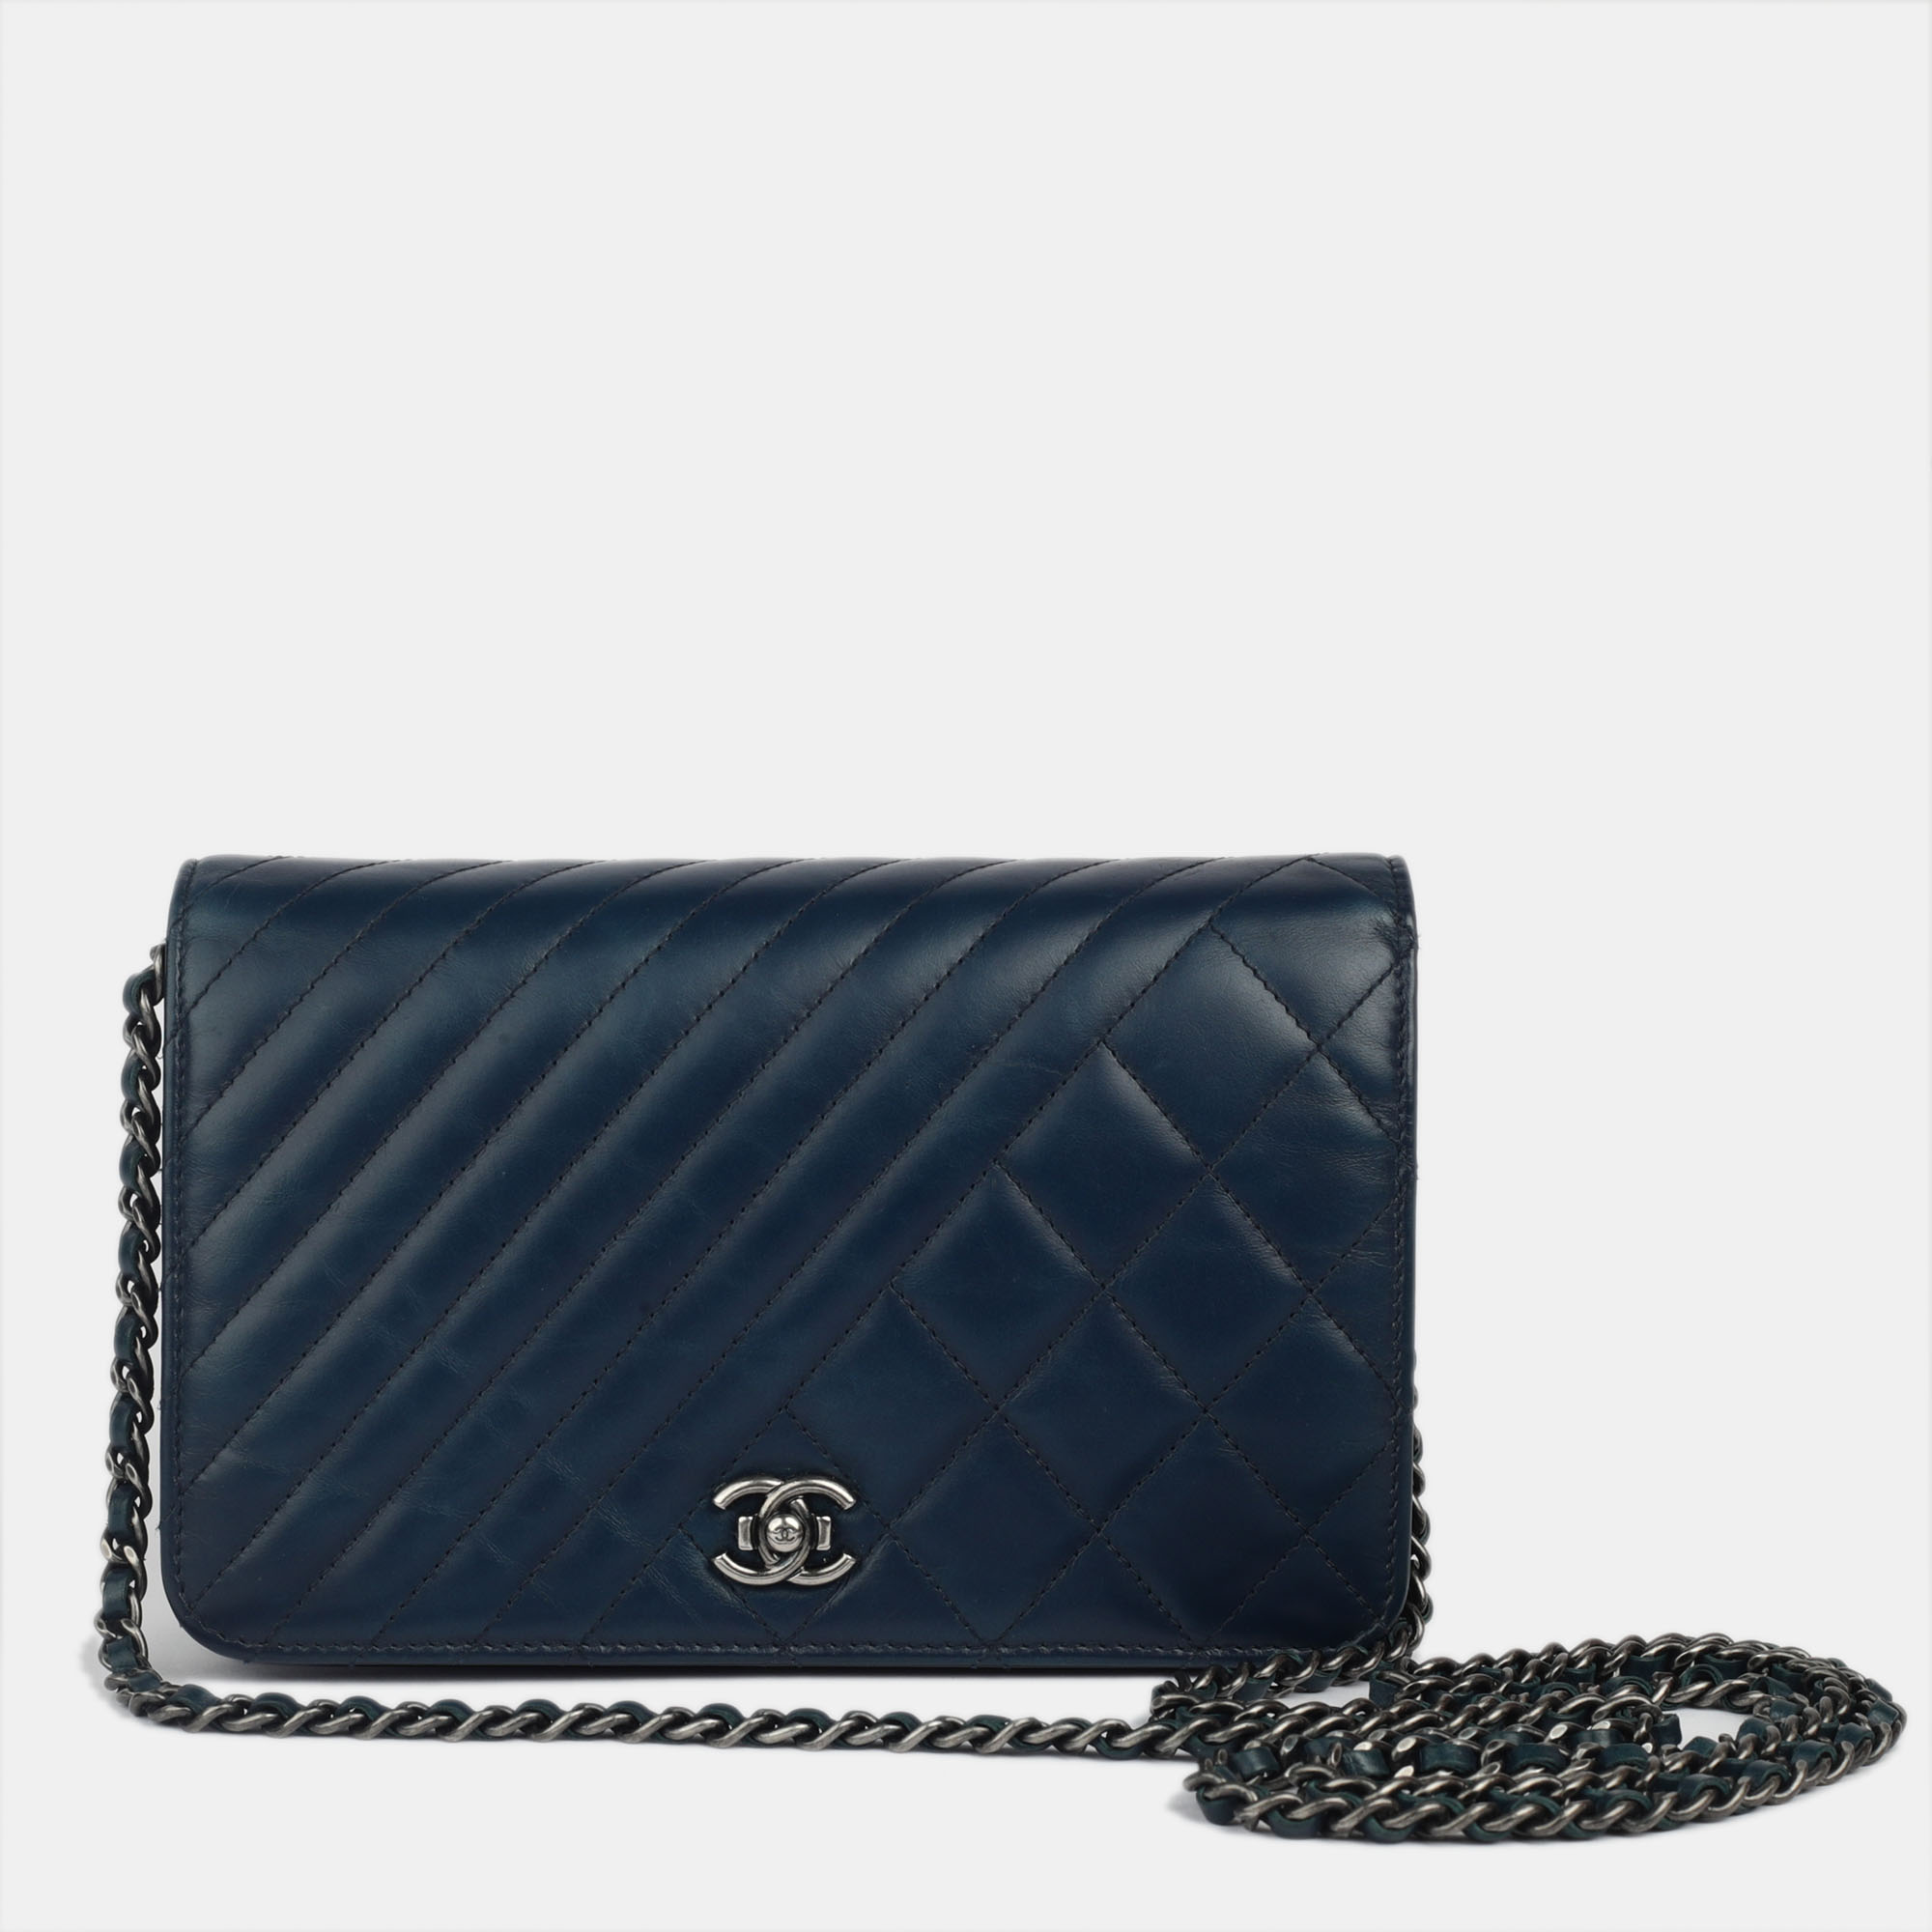 Chanel navy blue lambskin classic woc bag